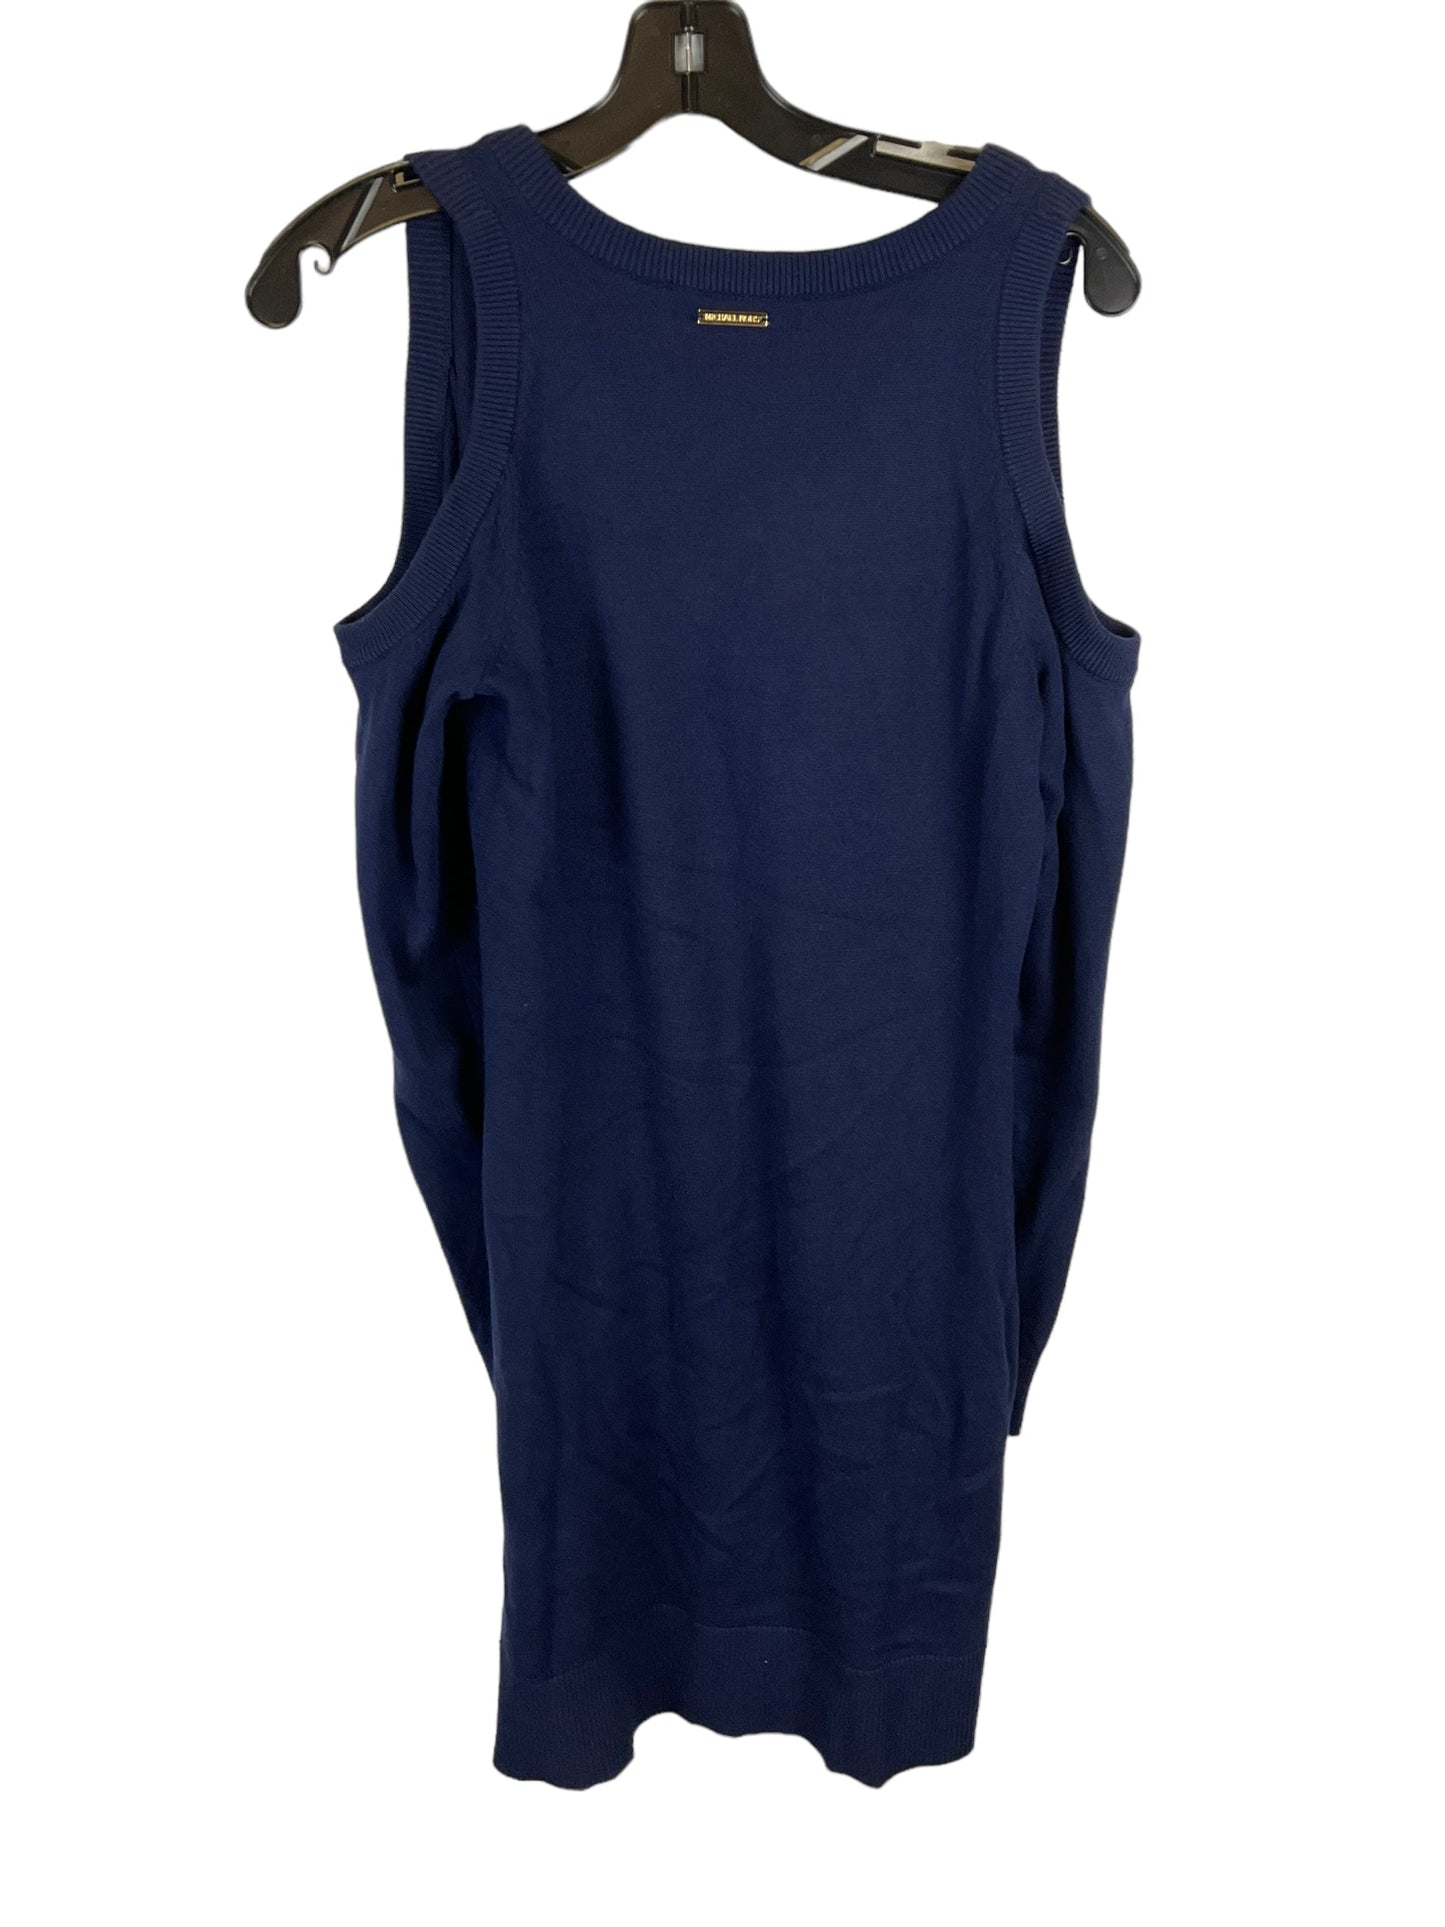 Dress Designer By Michael By Michael Kors  Size: S